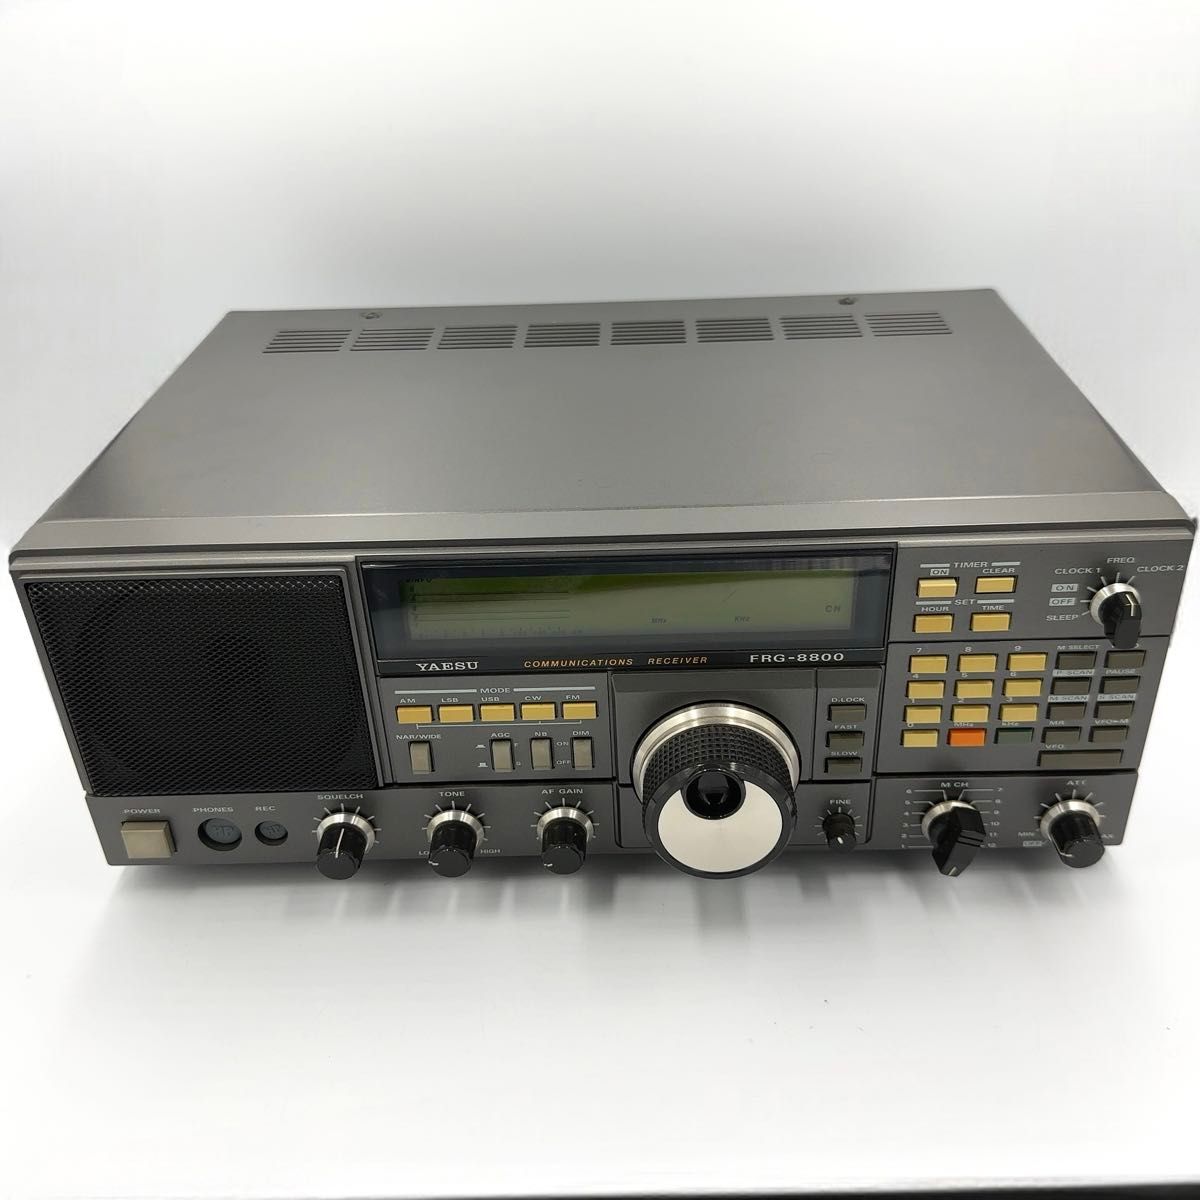 美品 YAESU ヤエス FRG-8800 八重洲無線 通信型受信機 